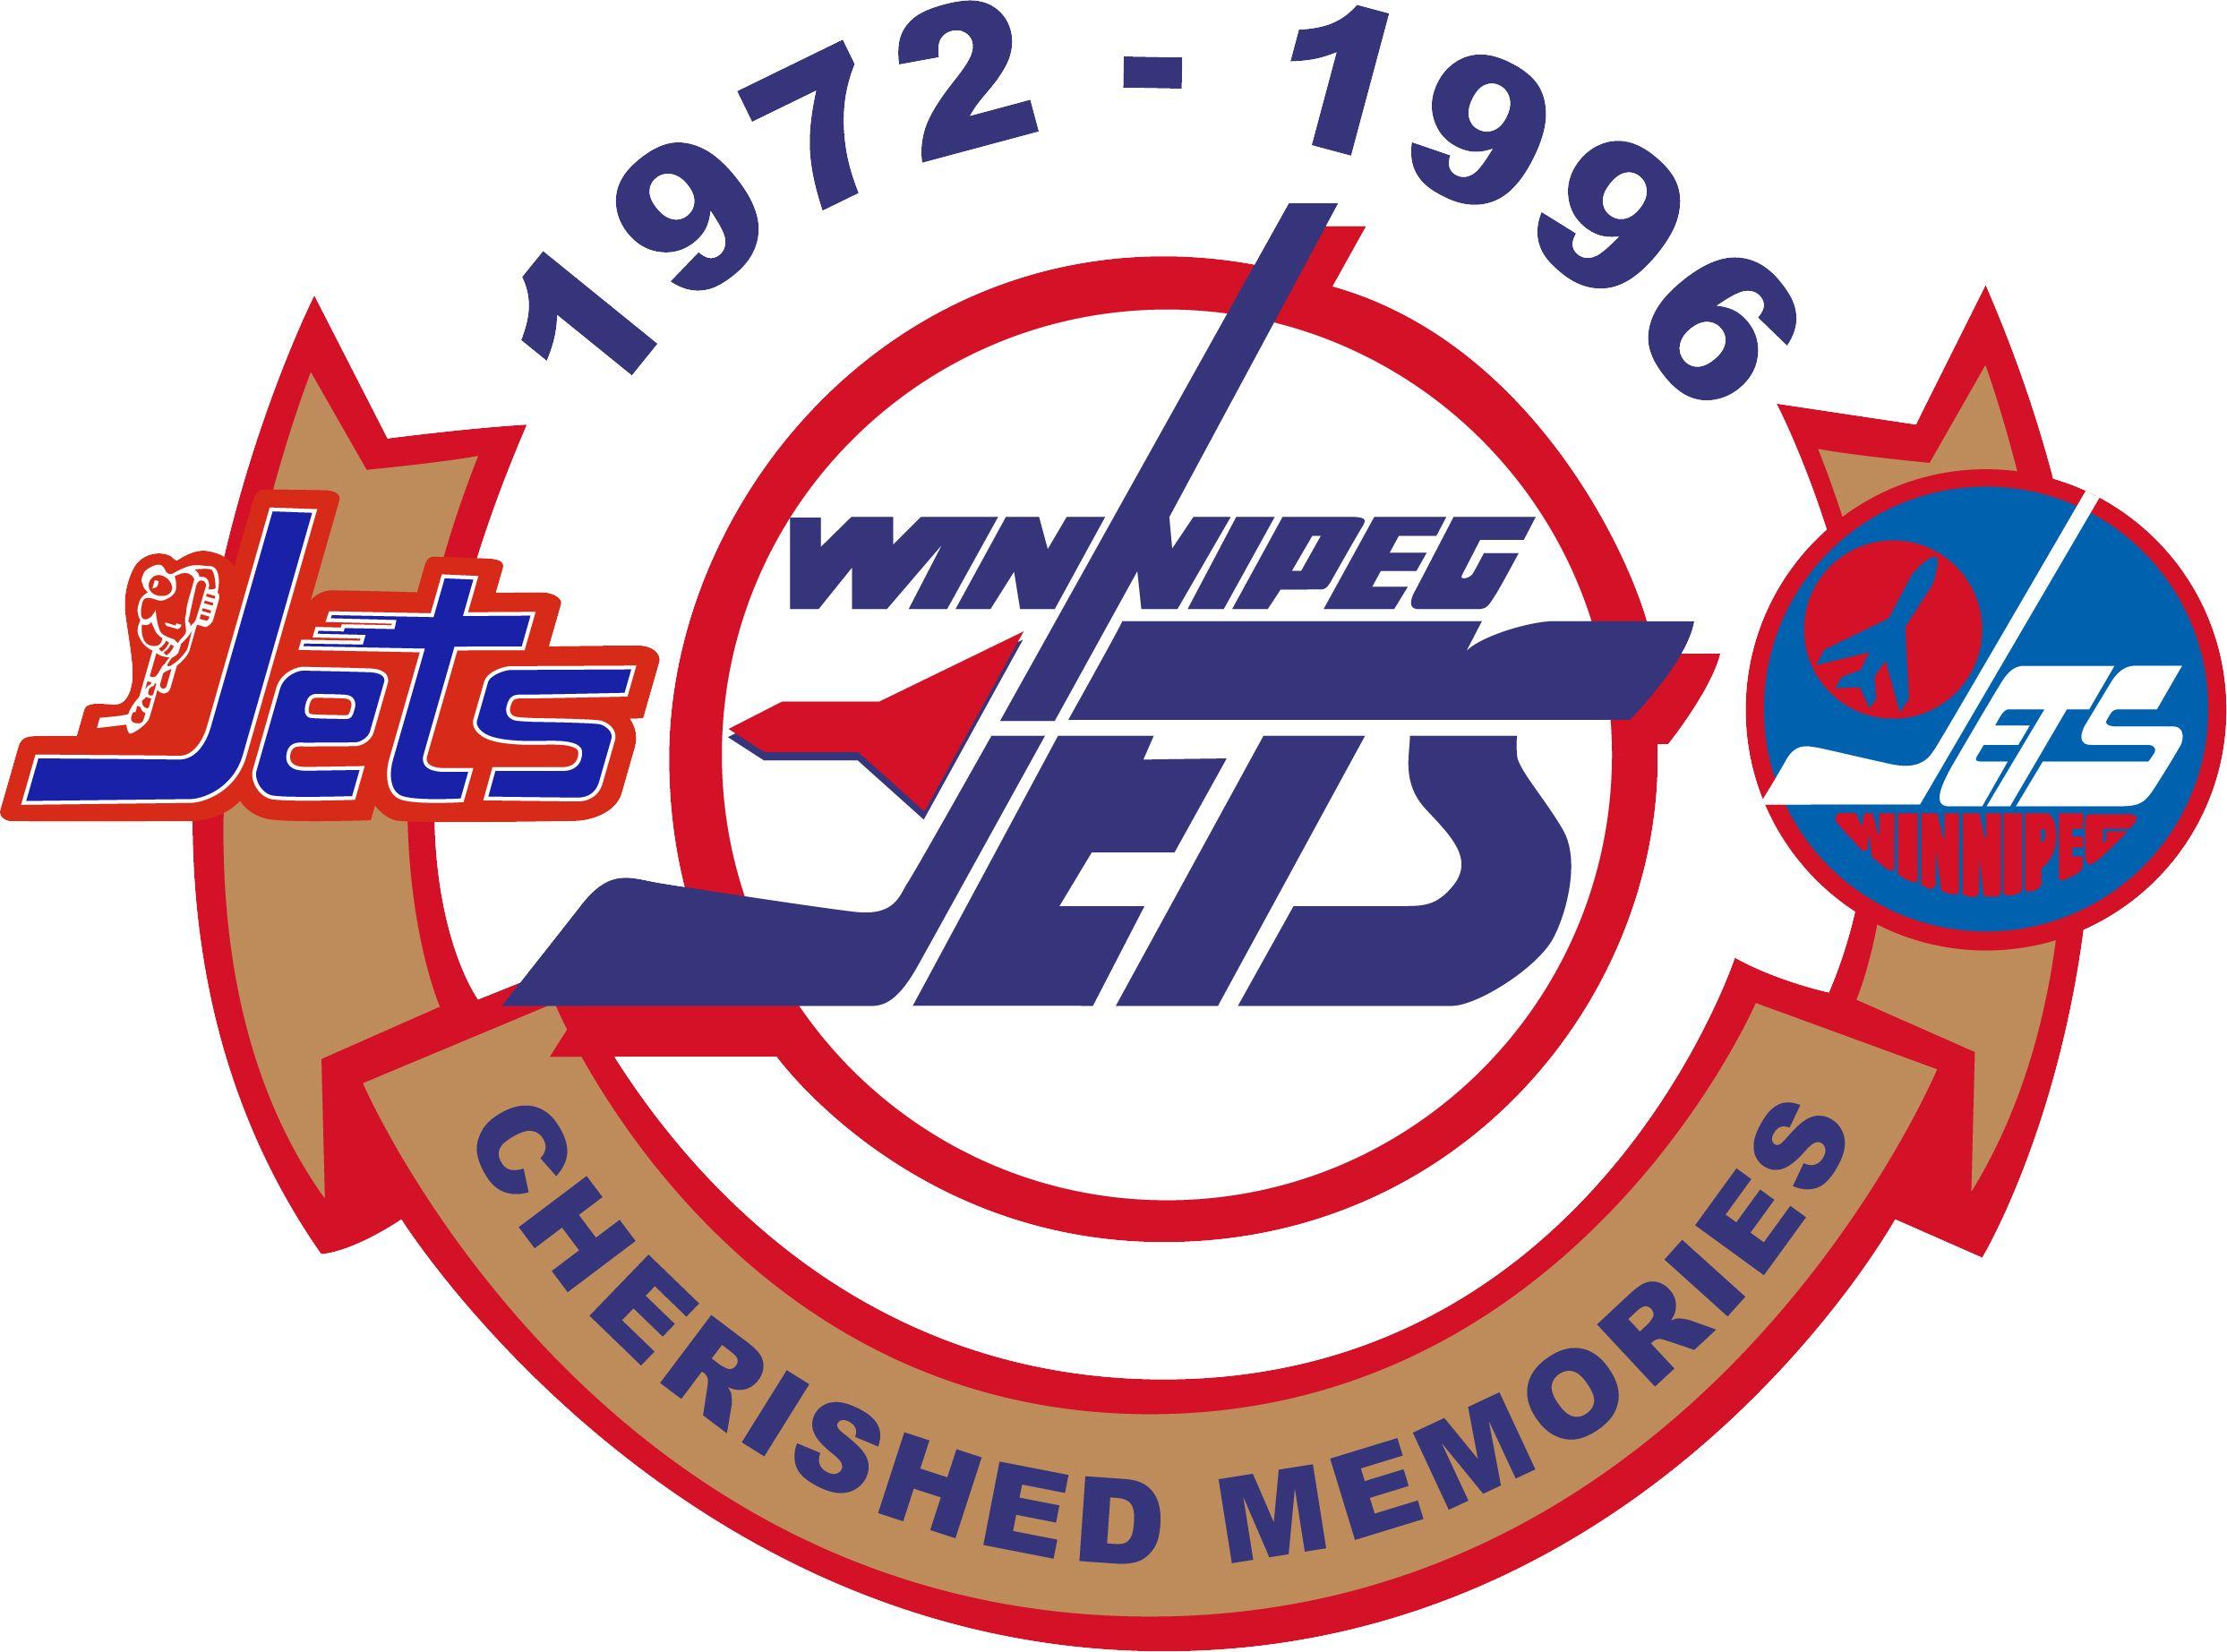 Winnipeg Jets WHA Logo - The Winnipeg Jets were a professional ice hockey team based